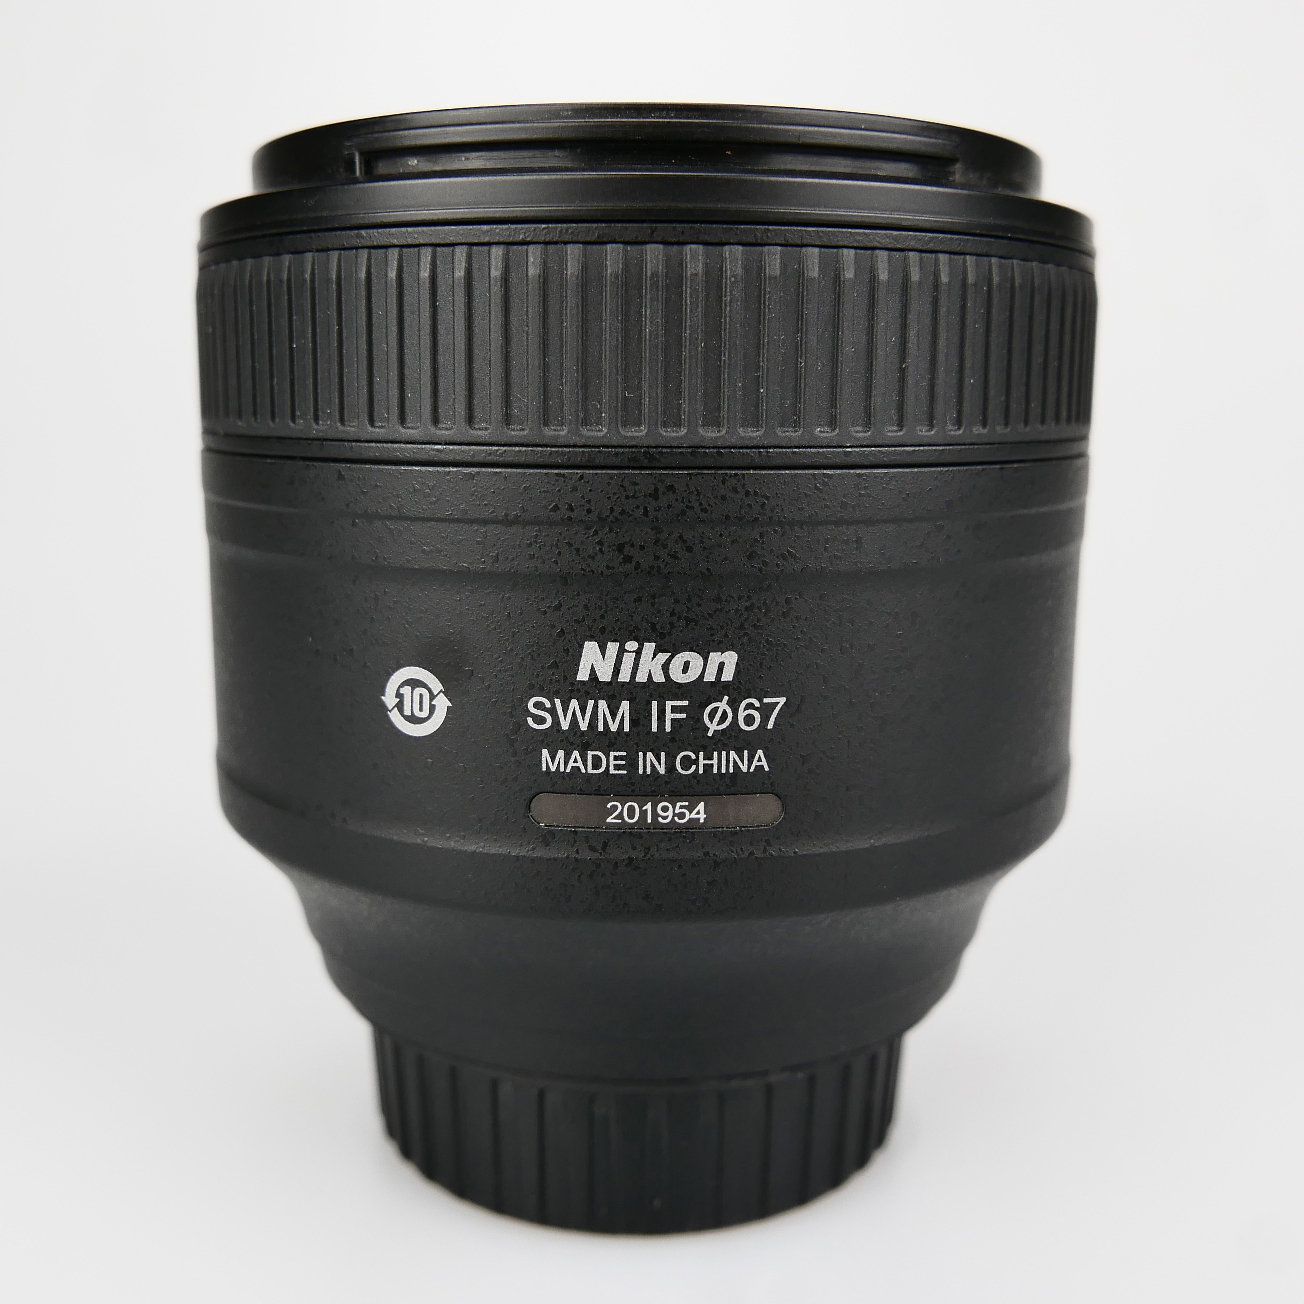 Myyty) Nikon AF-S Nikkor 85mm f/1.8G (käytetty)